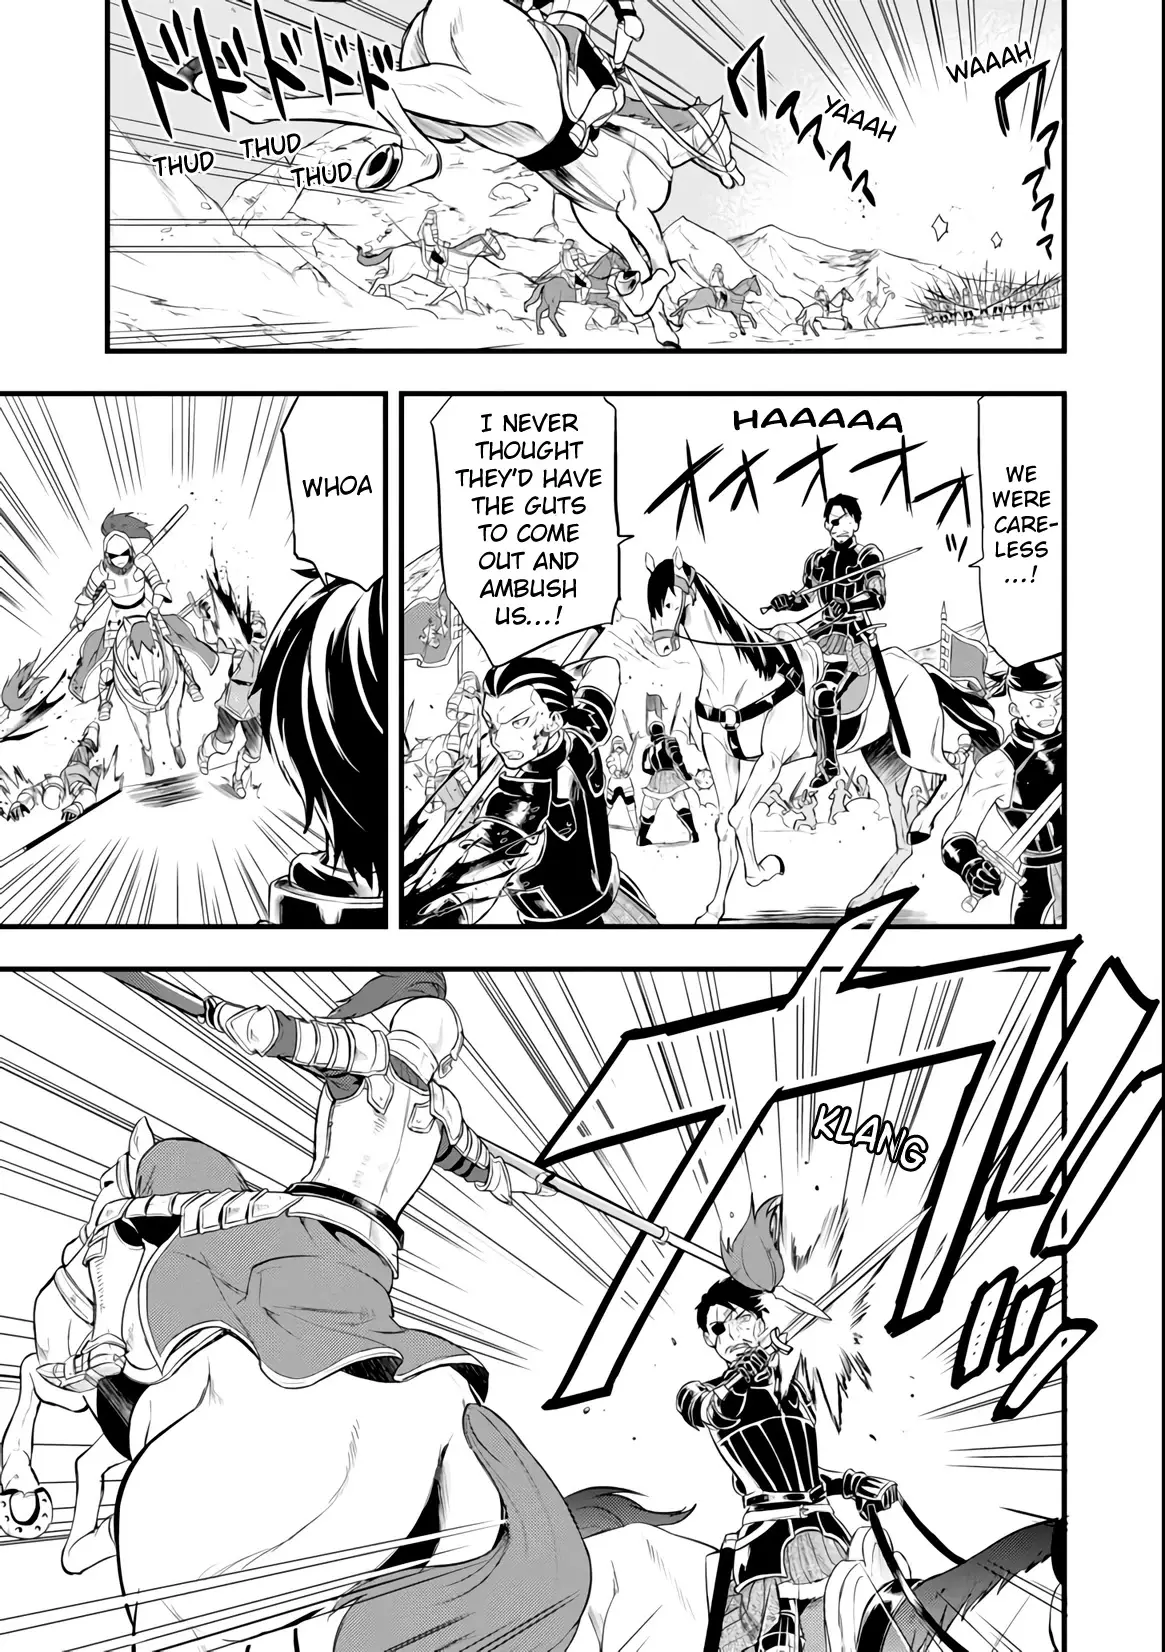 Mysterious Job Called Oda Nobunaga - 13 page 5-56c8c75f